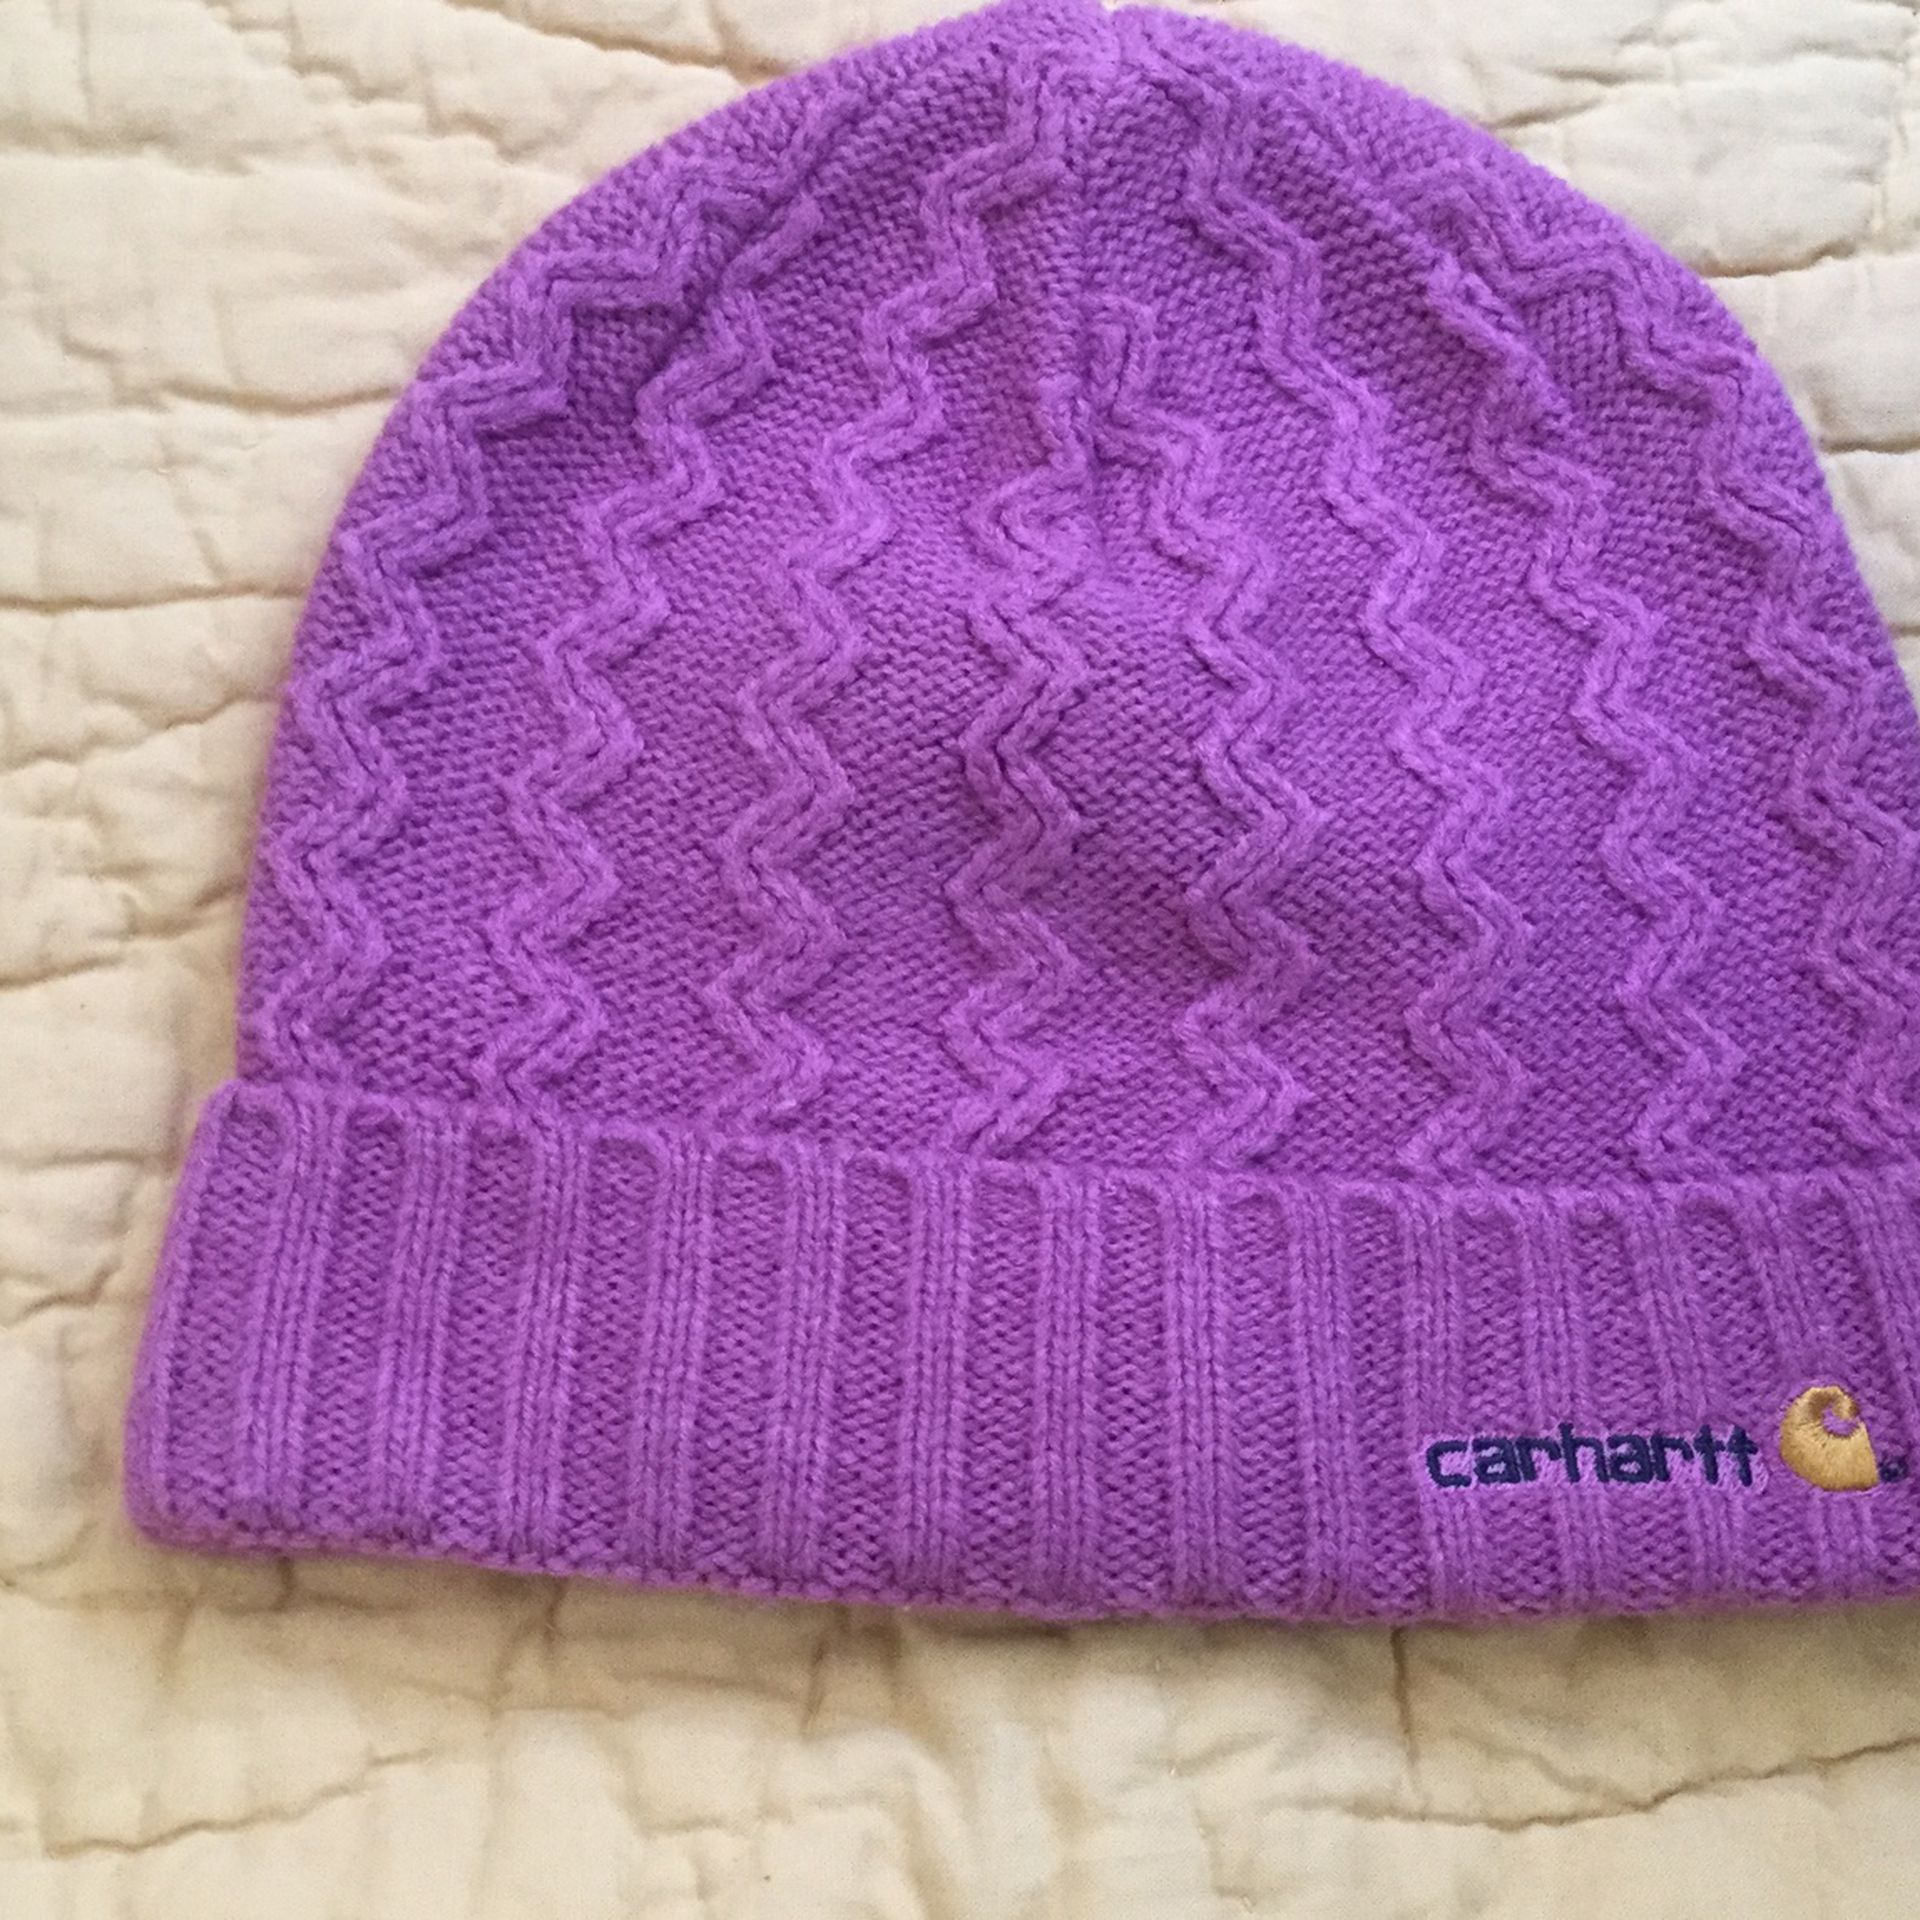 Carhartt Winter Hat